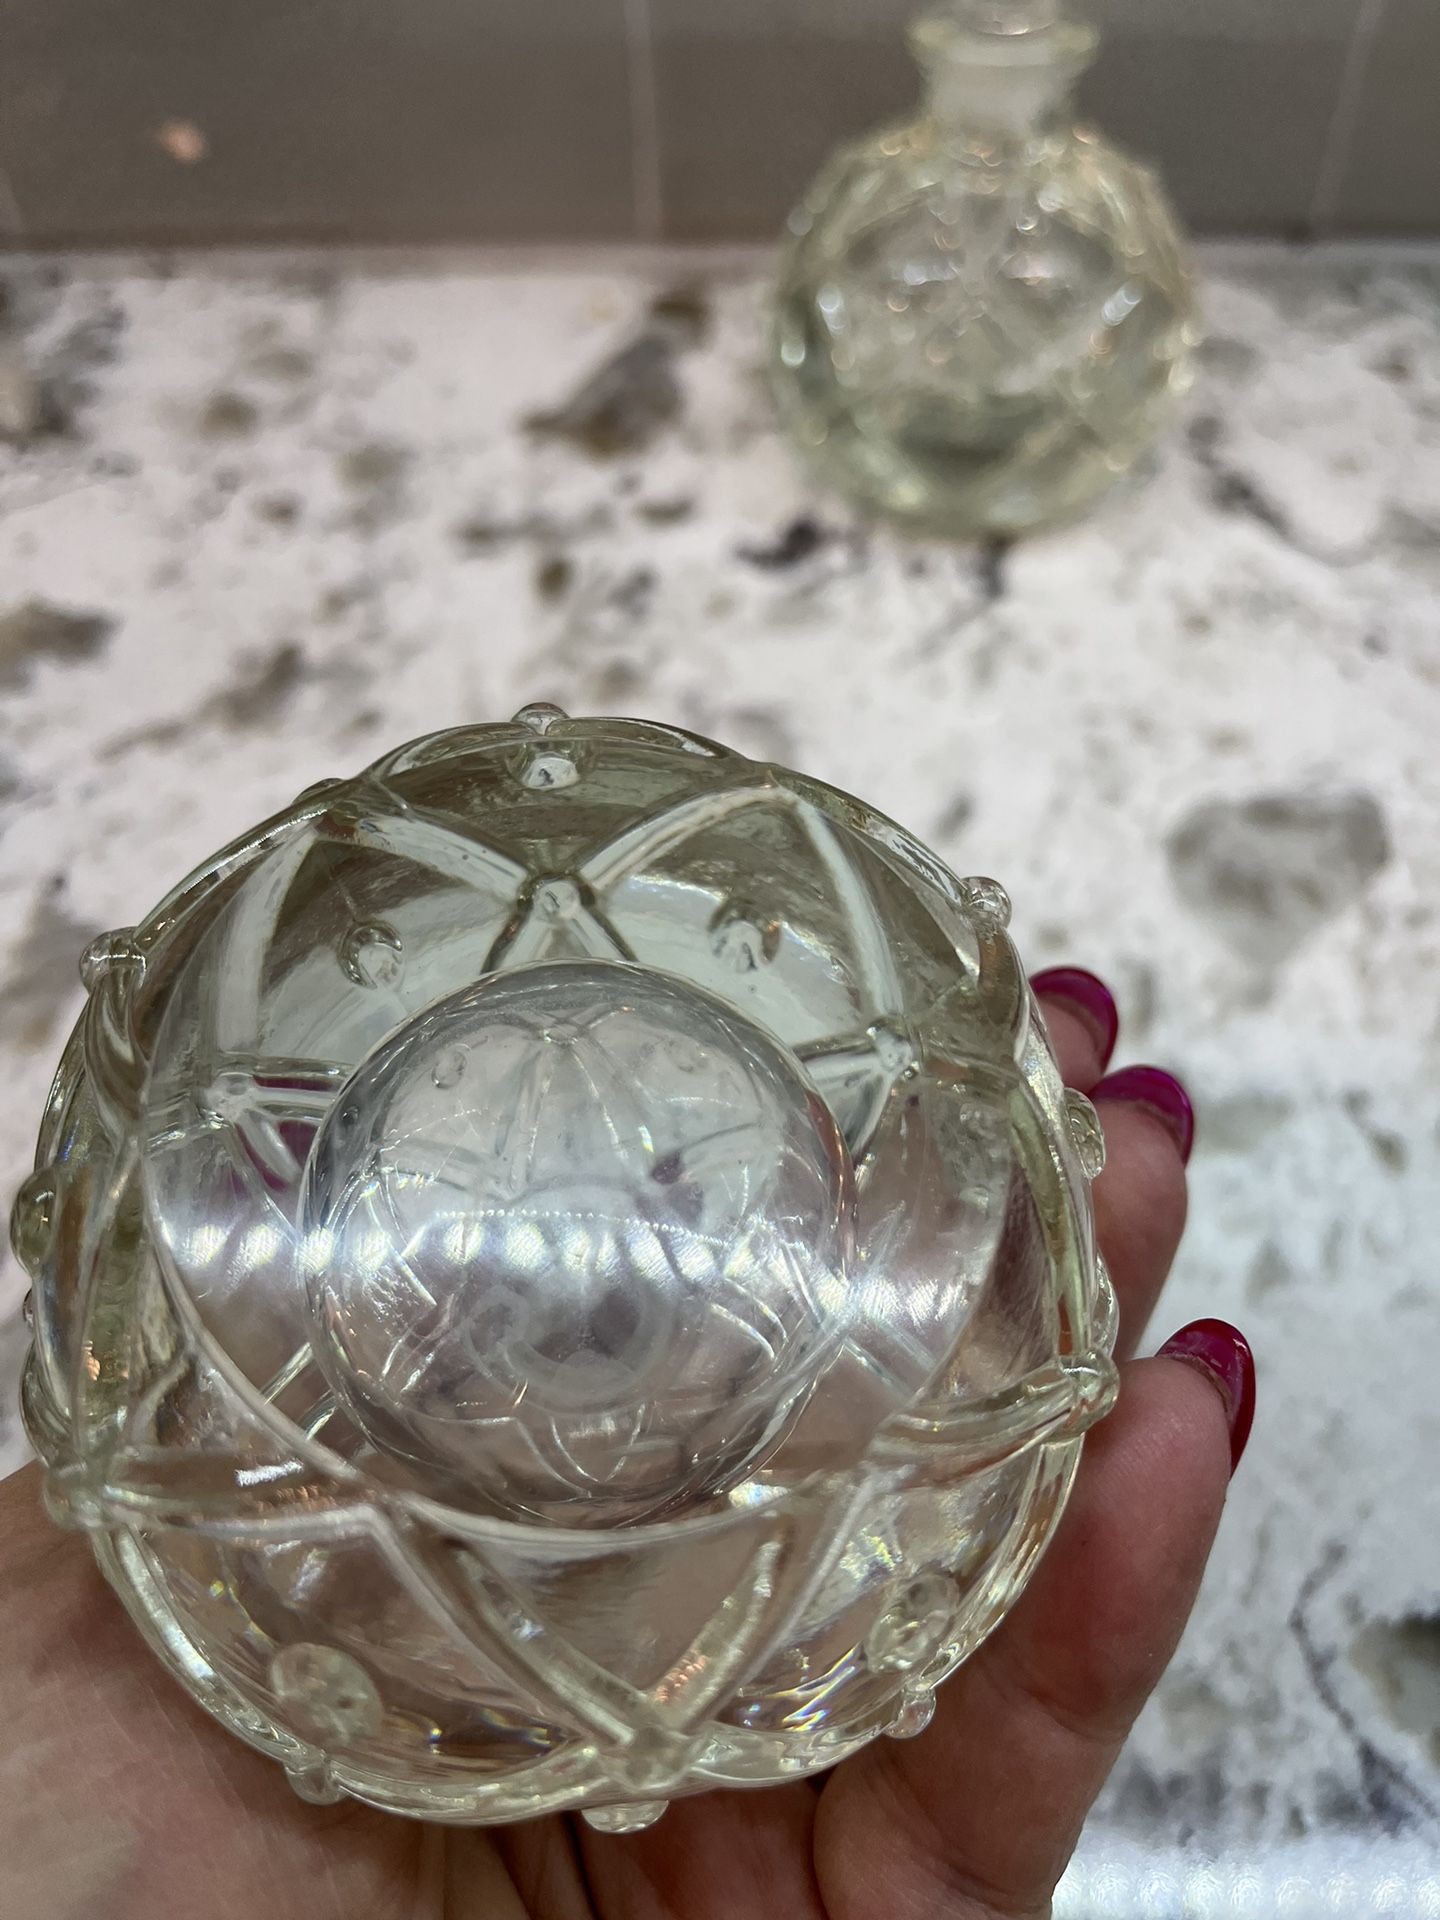 Luis Vuitton Attrape Reves Decant 5ml, 10ml, 30ml Premium Thick Glass  Atomizer for Sale in Auburn, WA - OfferUp